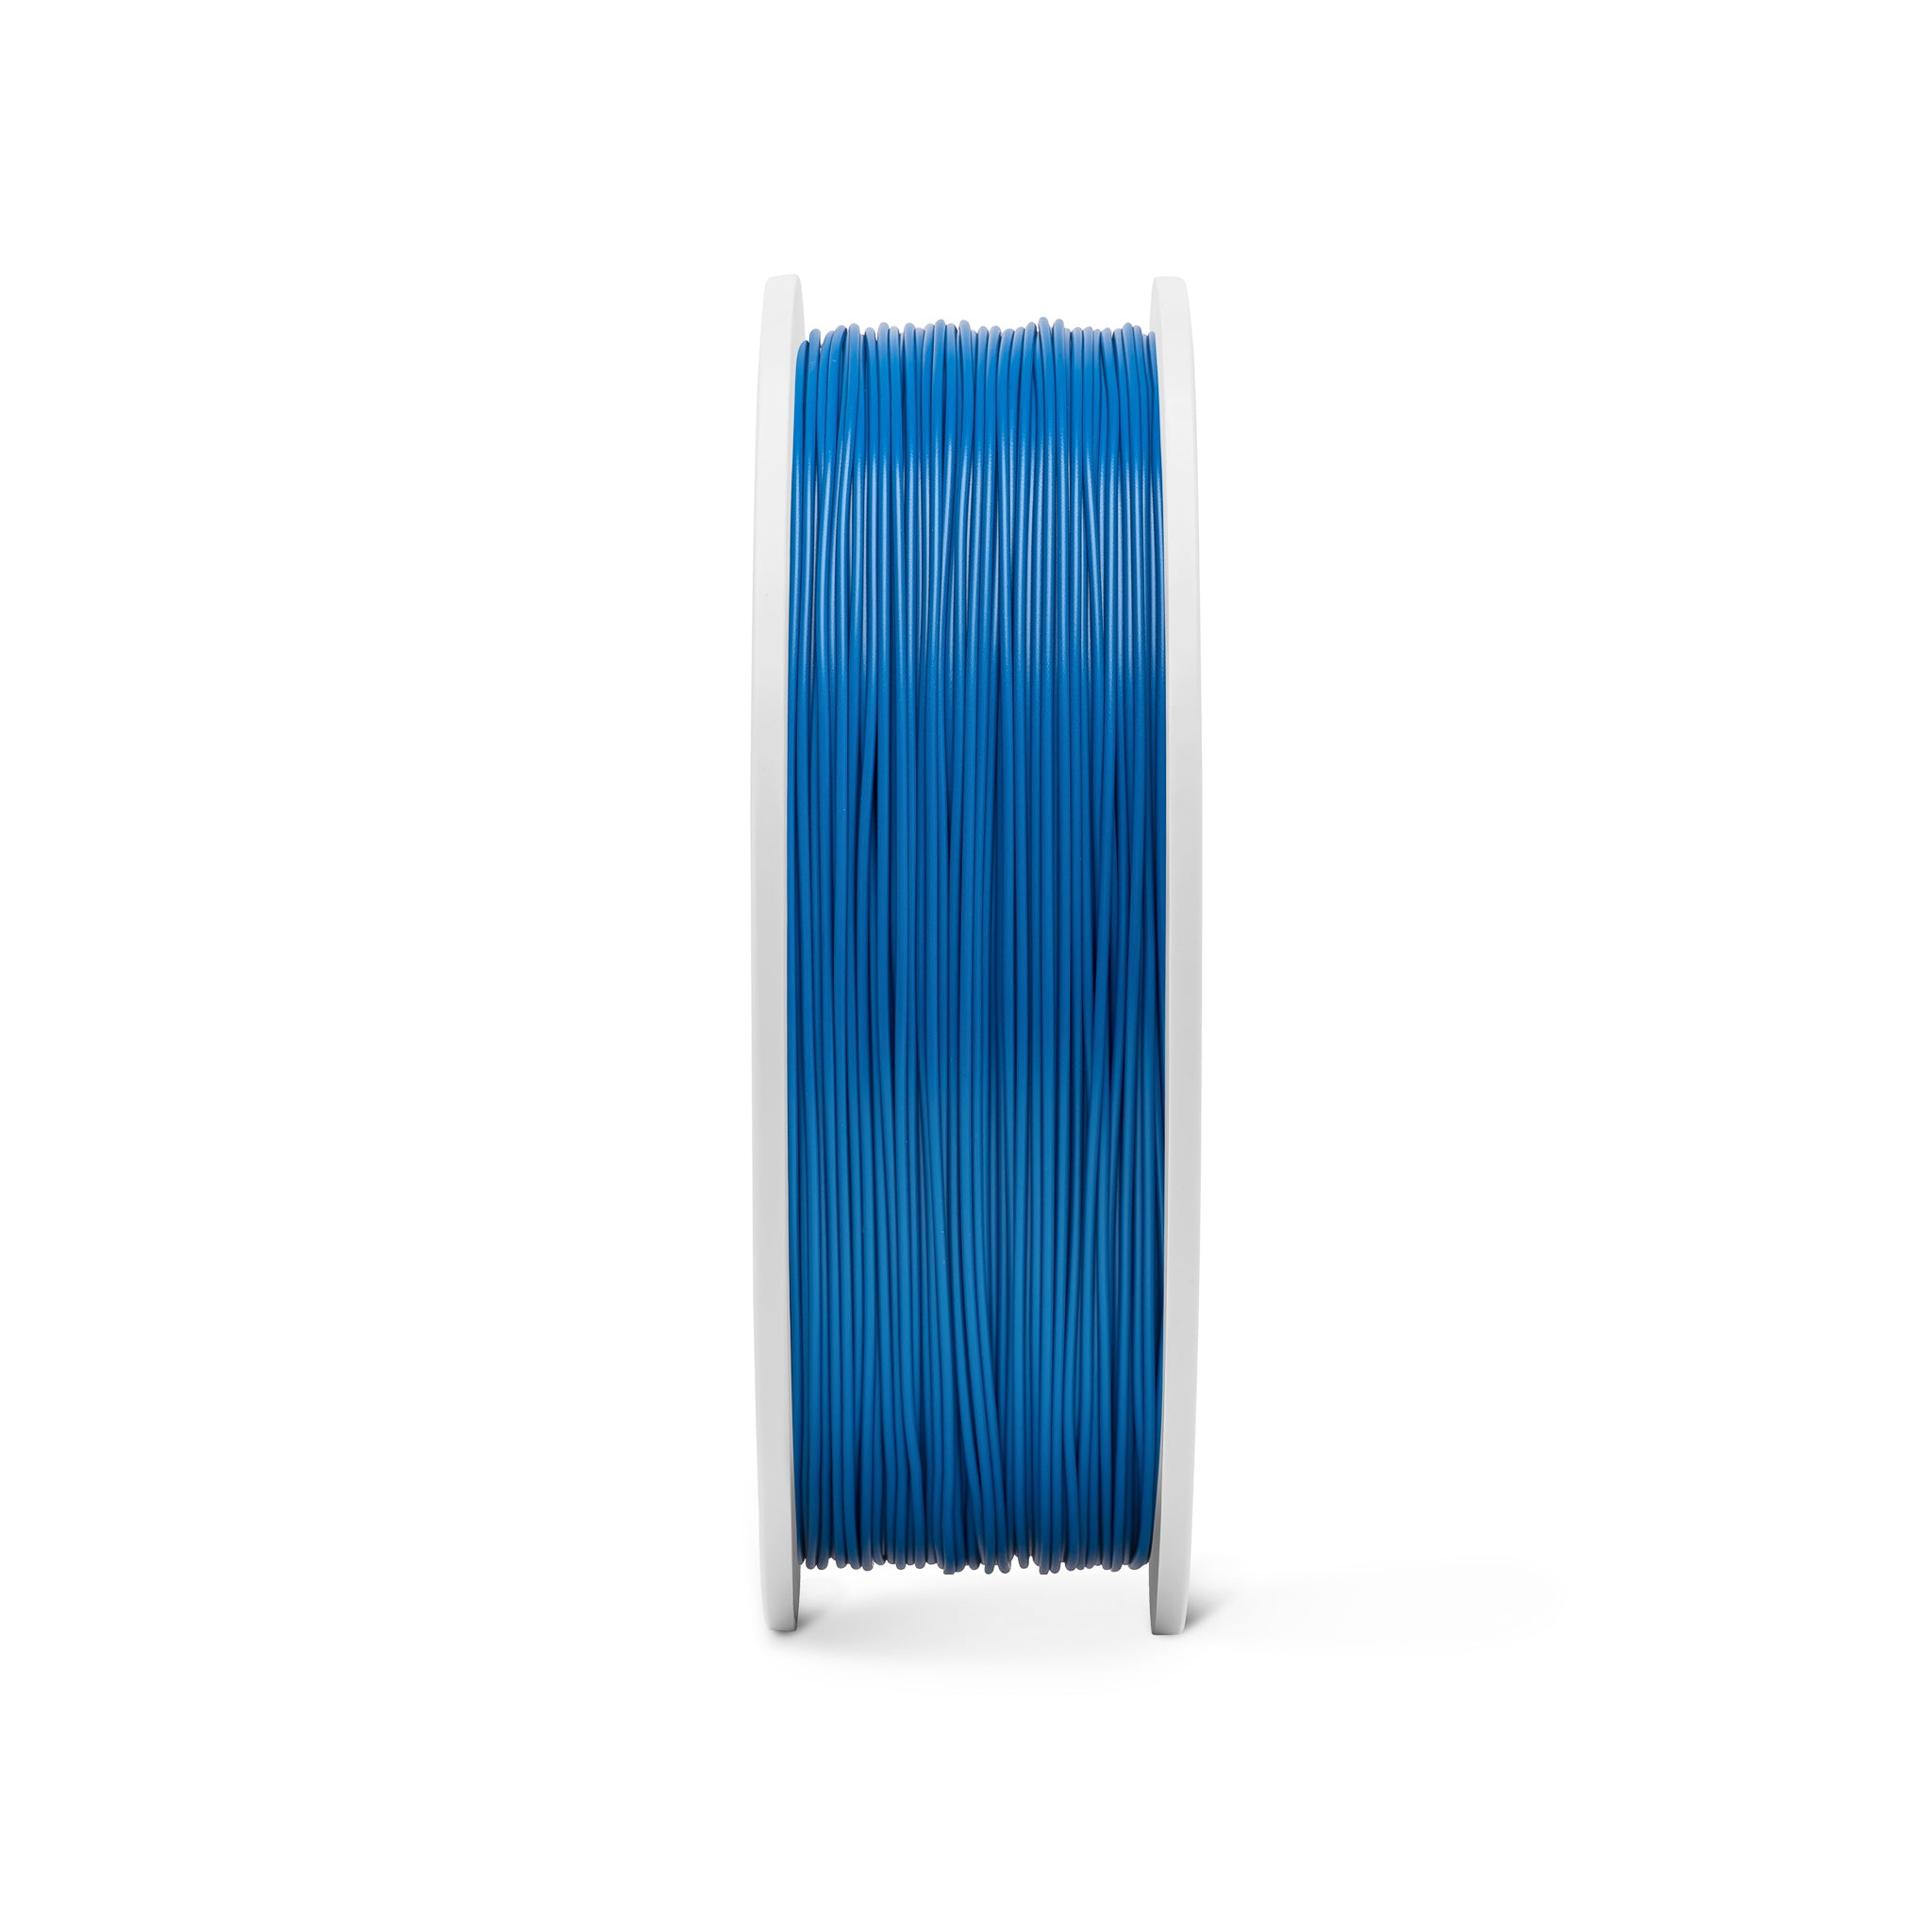 PTFE Bowden Schlauch 1,75mm blau (5,99€/m) – Princore GmbH